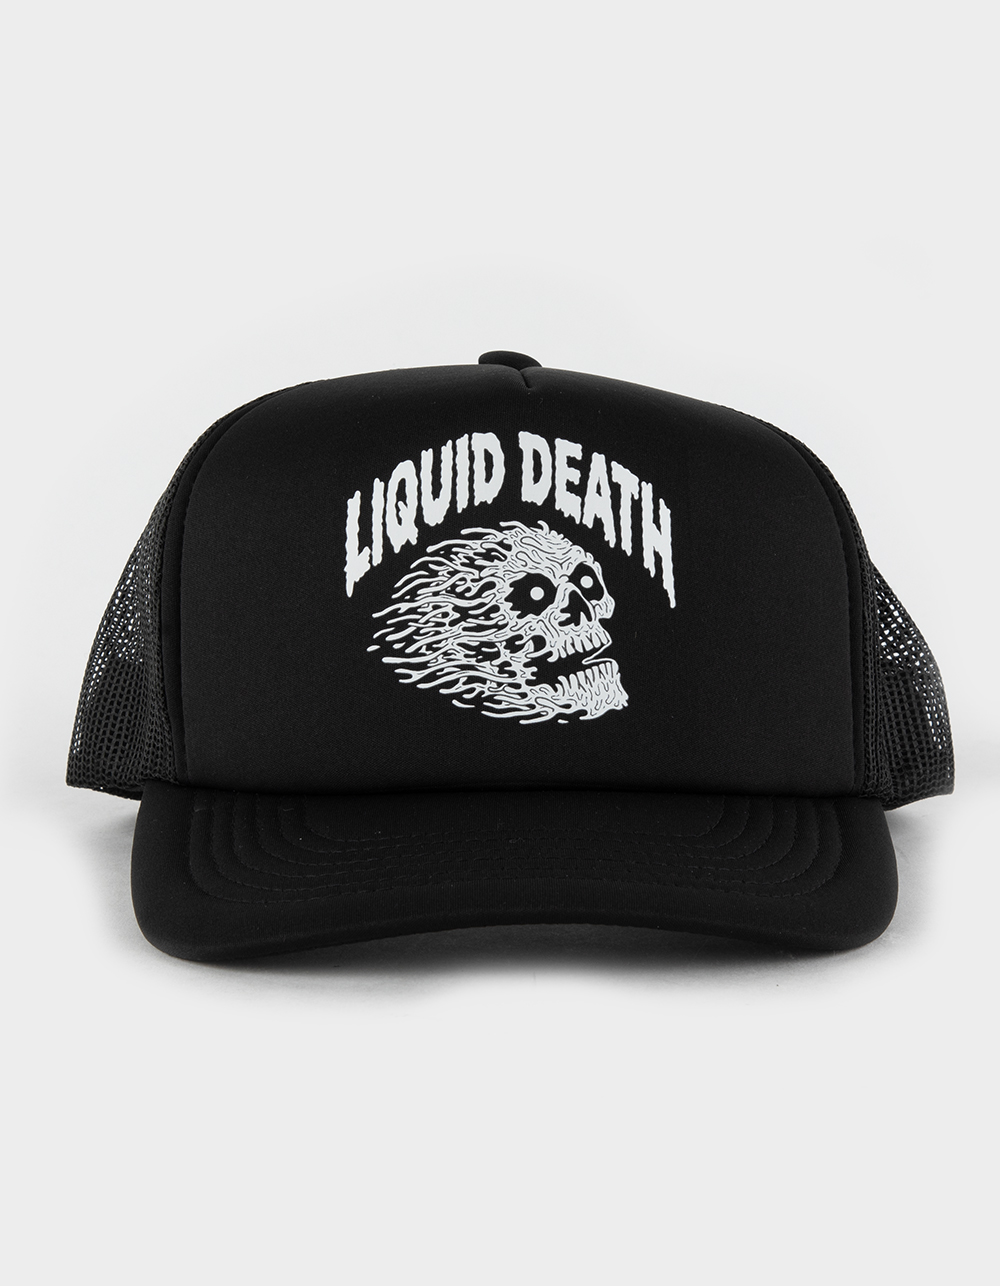 Liquid Death Vicious Death Trucker Hat - Black - One Size